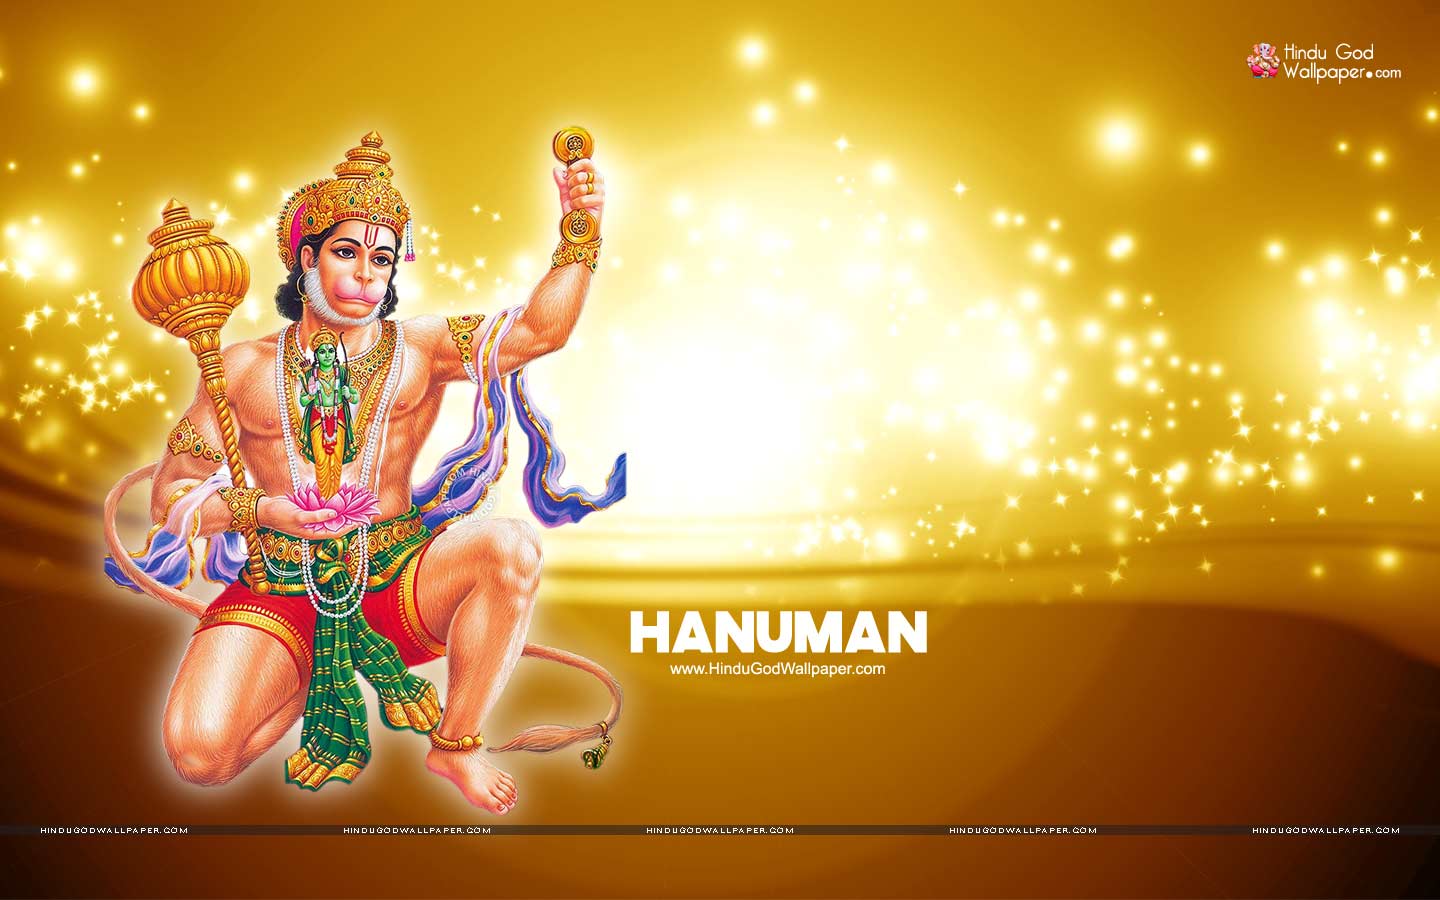 Lord Hanuman 4k HD Wallpaper Image Photos